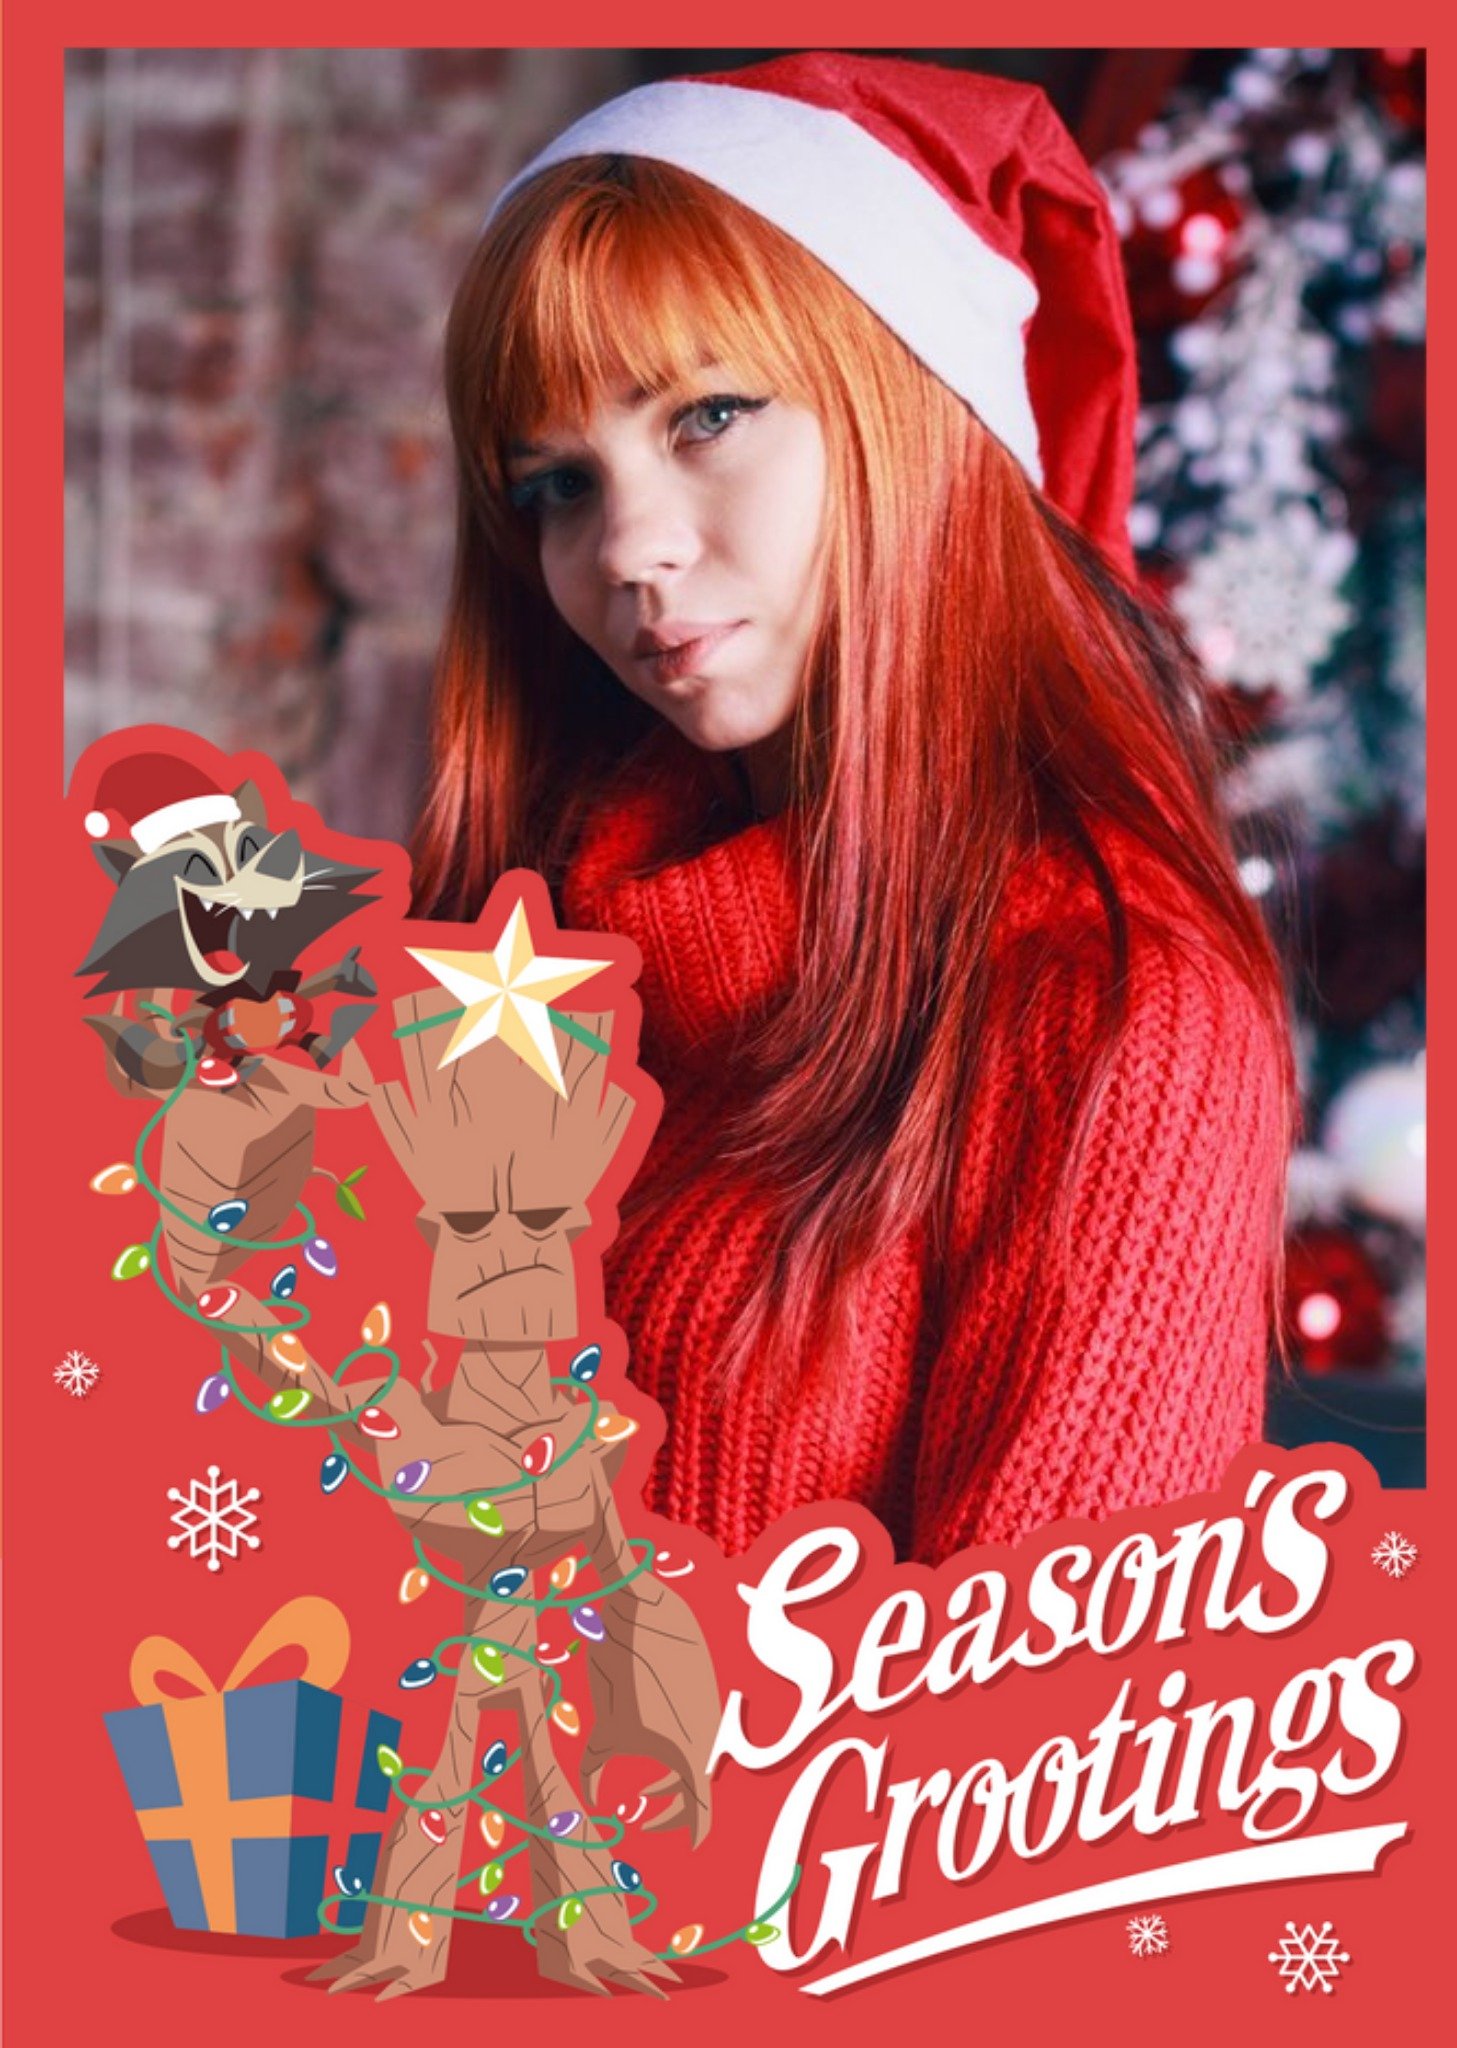 Disney Marvel Comics Cartoon Groot And Rocket Racoon Photo Upload Christmas Card Ecard